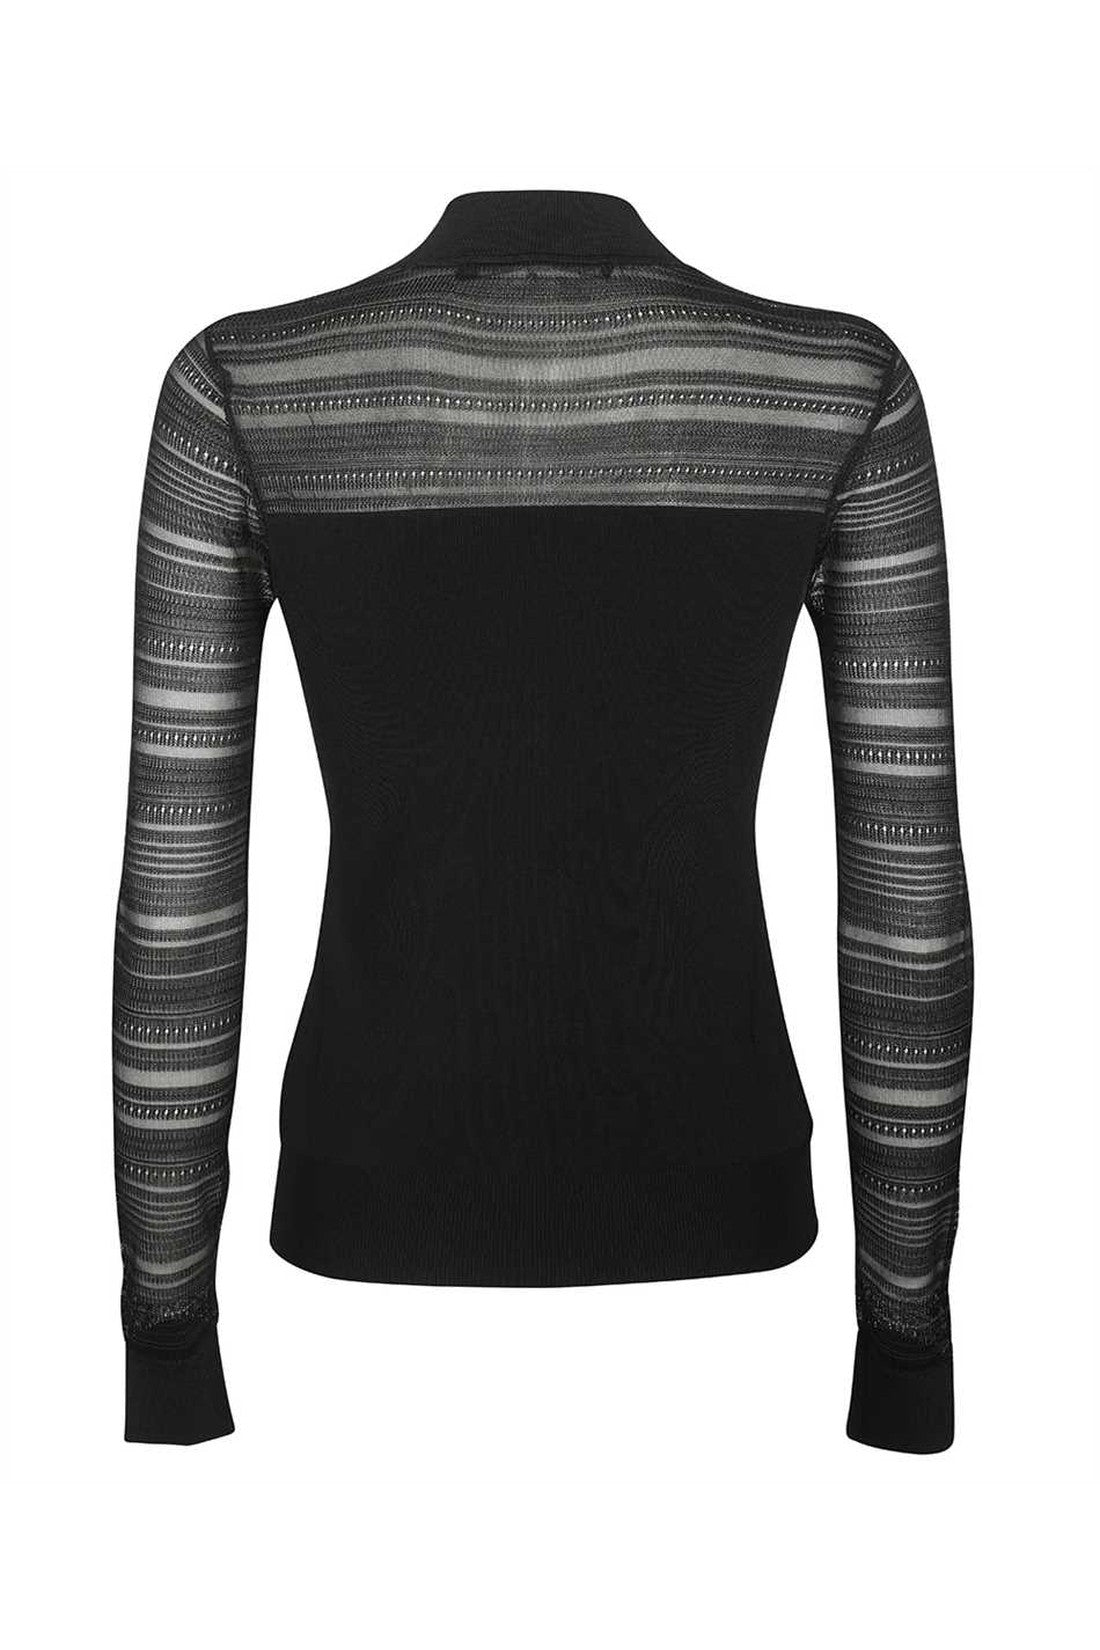 Turtleneck sweater-Karl Lagerfeld-OUTLET-SALE-ARCHIVIST